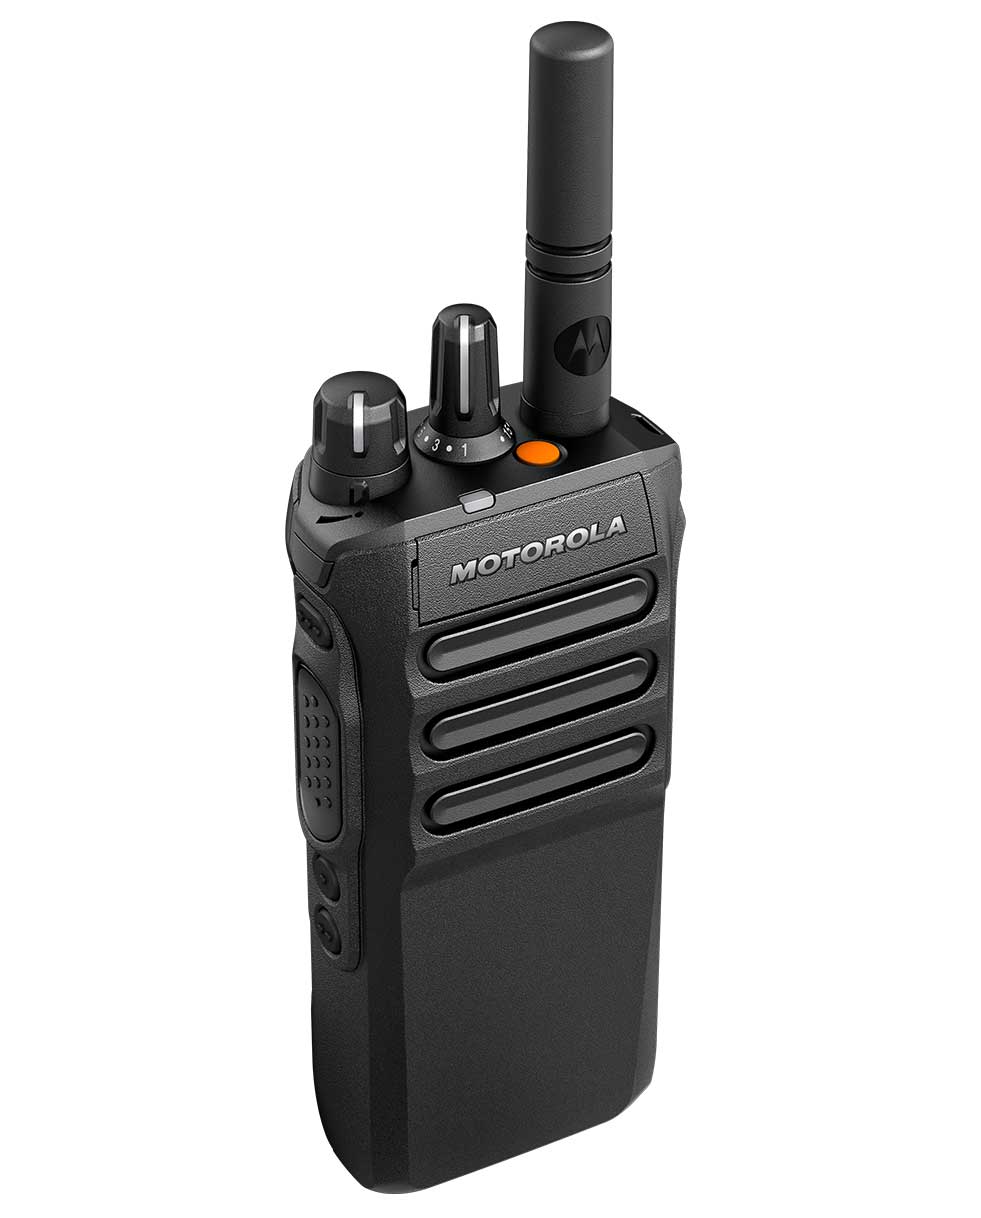 SET Motorola R7 Premium Handfunkgerät VHF ohne Display Batterie 2200mAh Antenne Ladegerät MDH06JDC9XA2AN